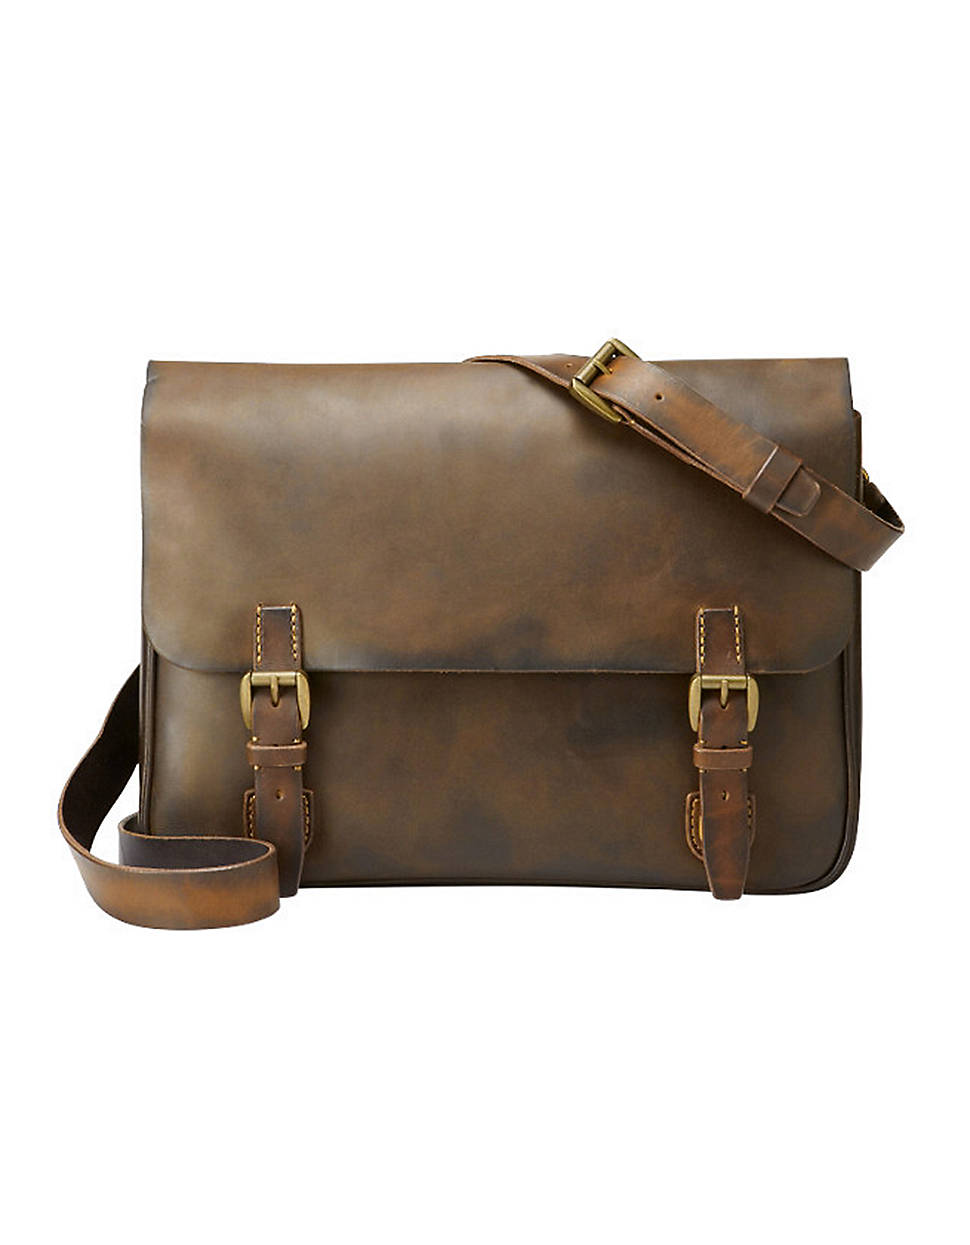 Lyst - Fossil Vintage Archive Leather Postmans Messenger Bag in Brown ...